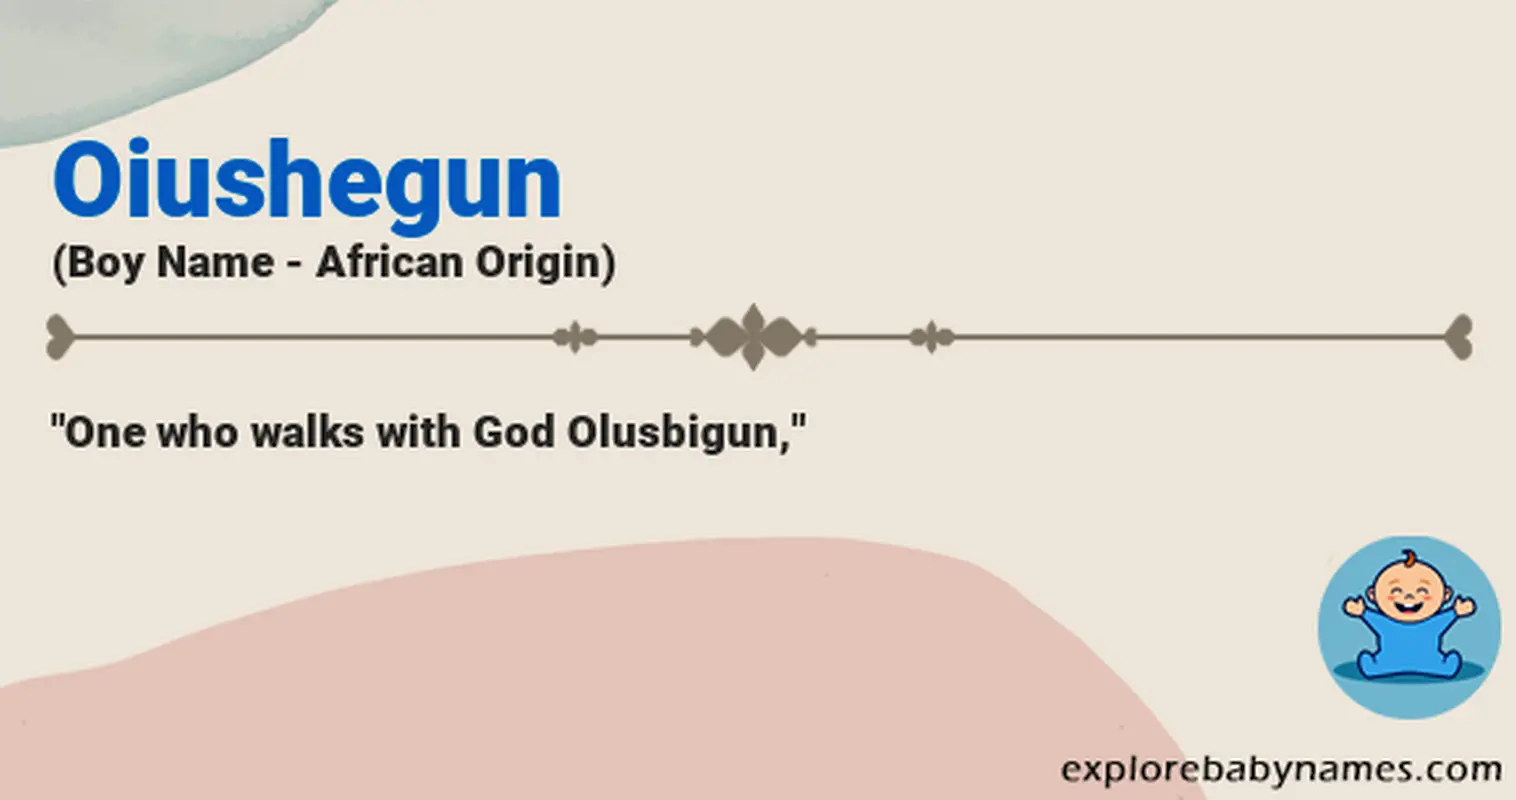 Meaning of Oiushegun